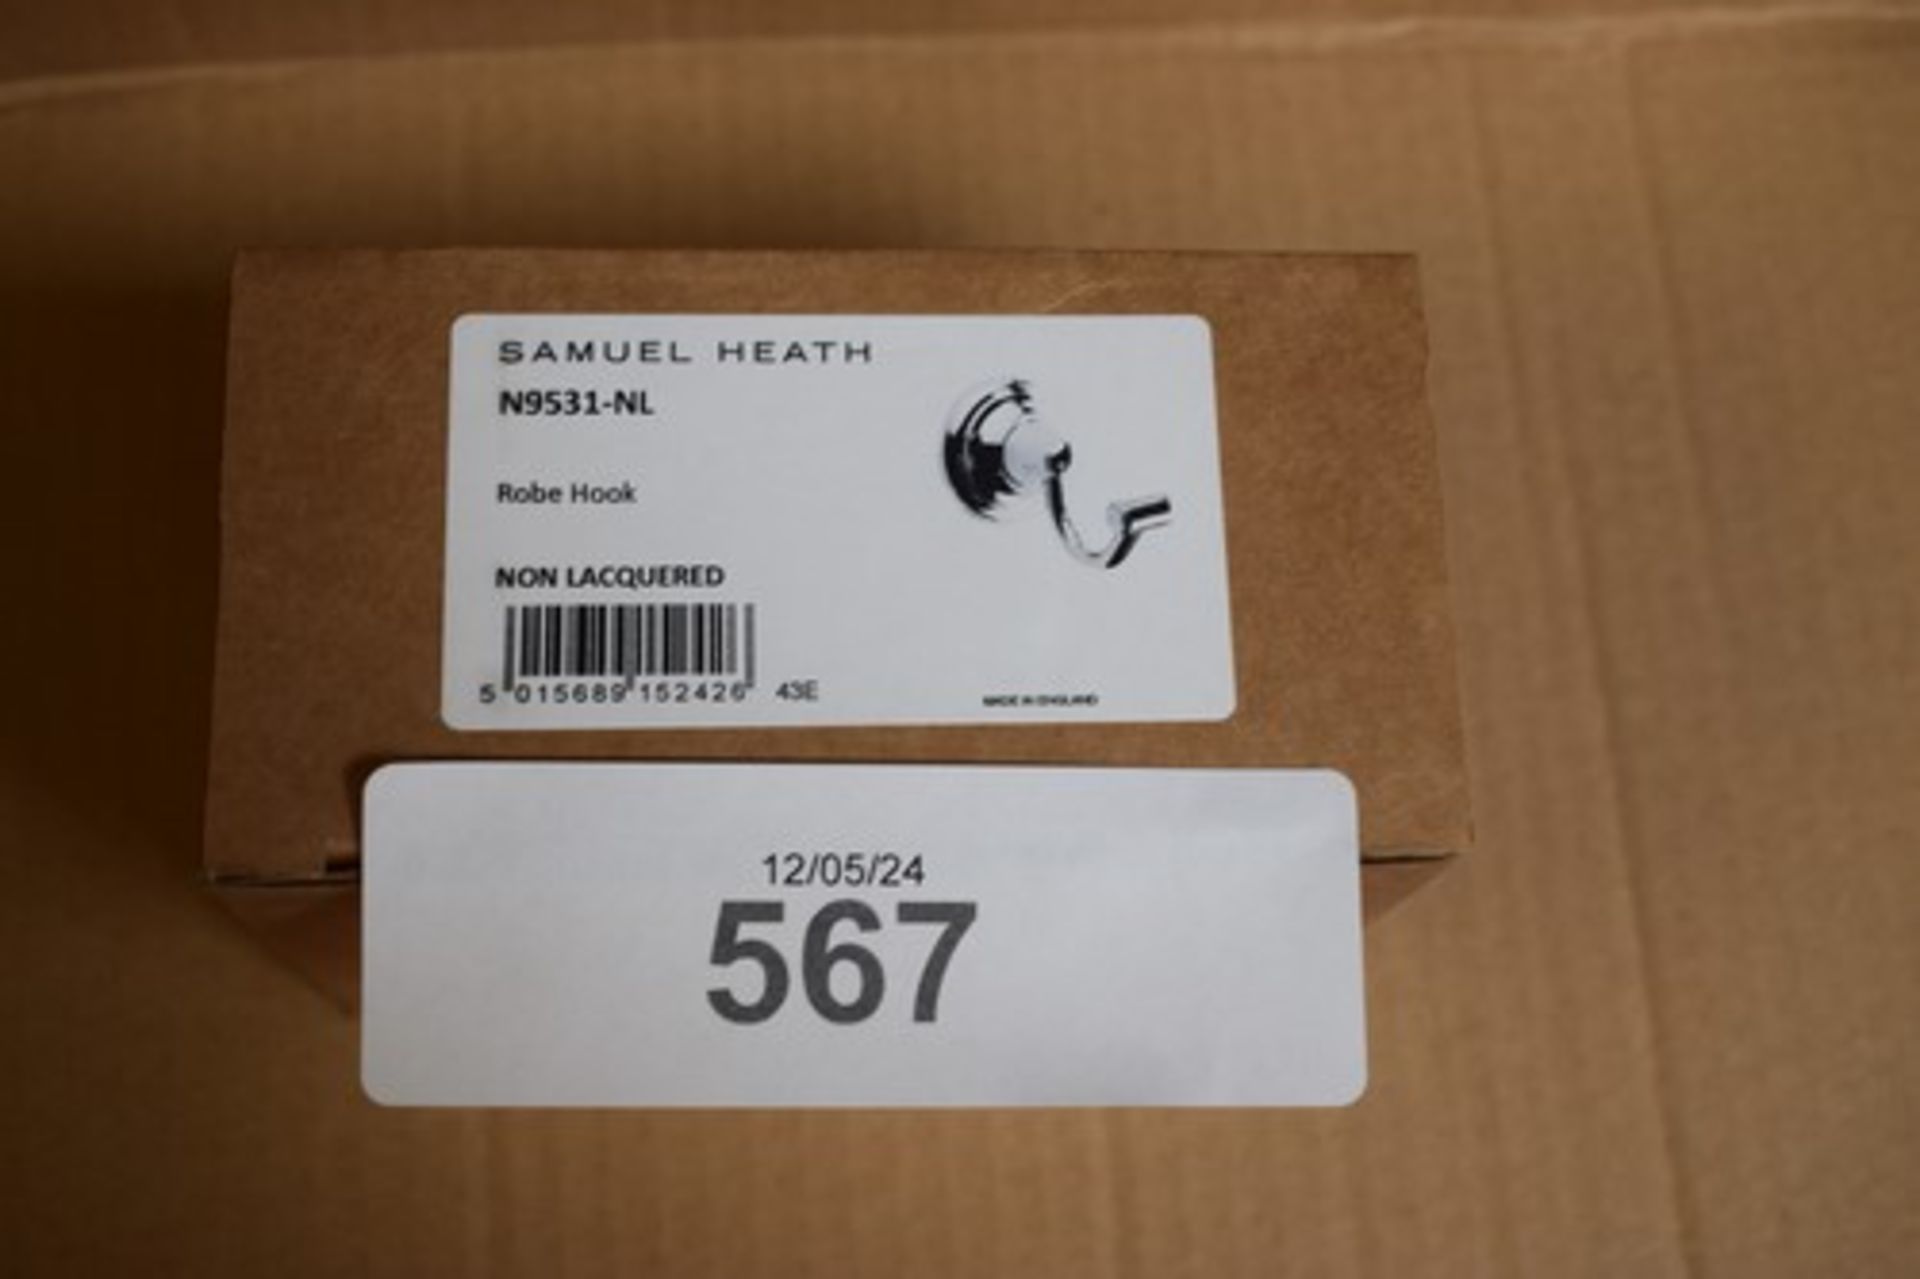 1 x Samuel Heath non lacquered robe hook, Model N9531-NL, EAN 5015689152426 - New in box (G6)